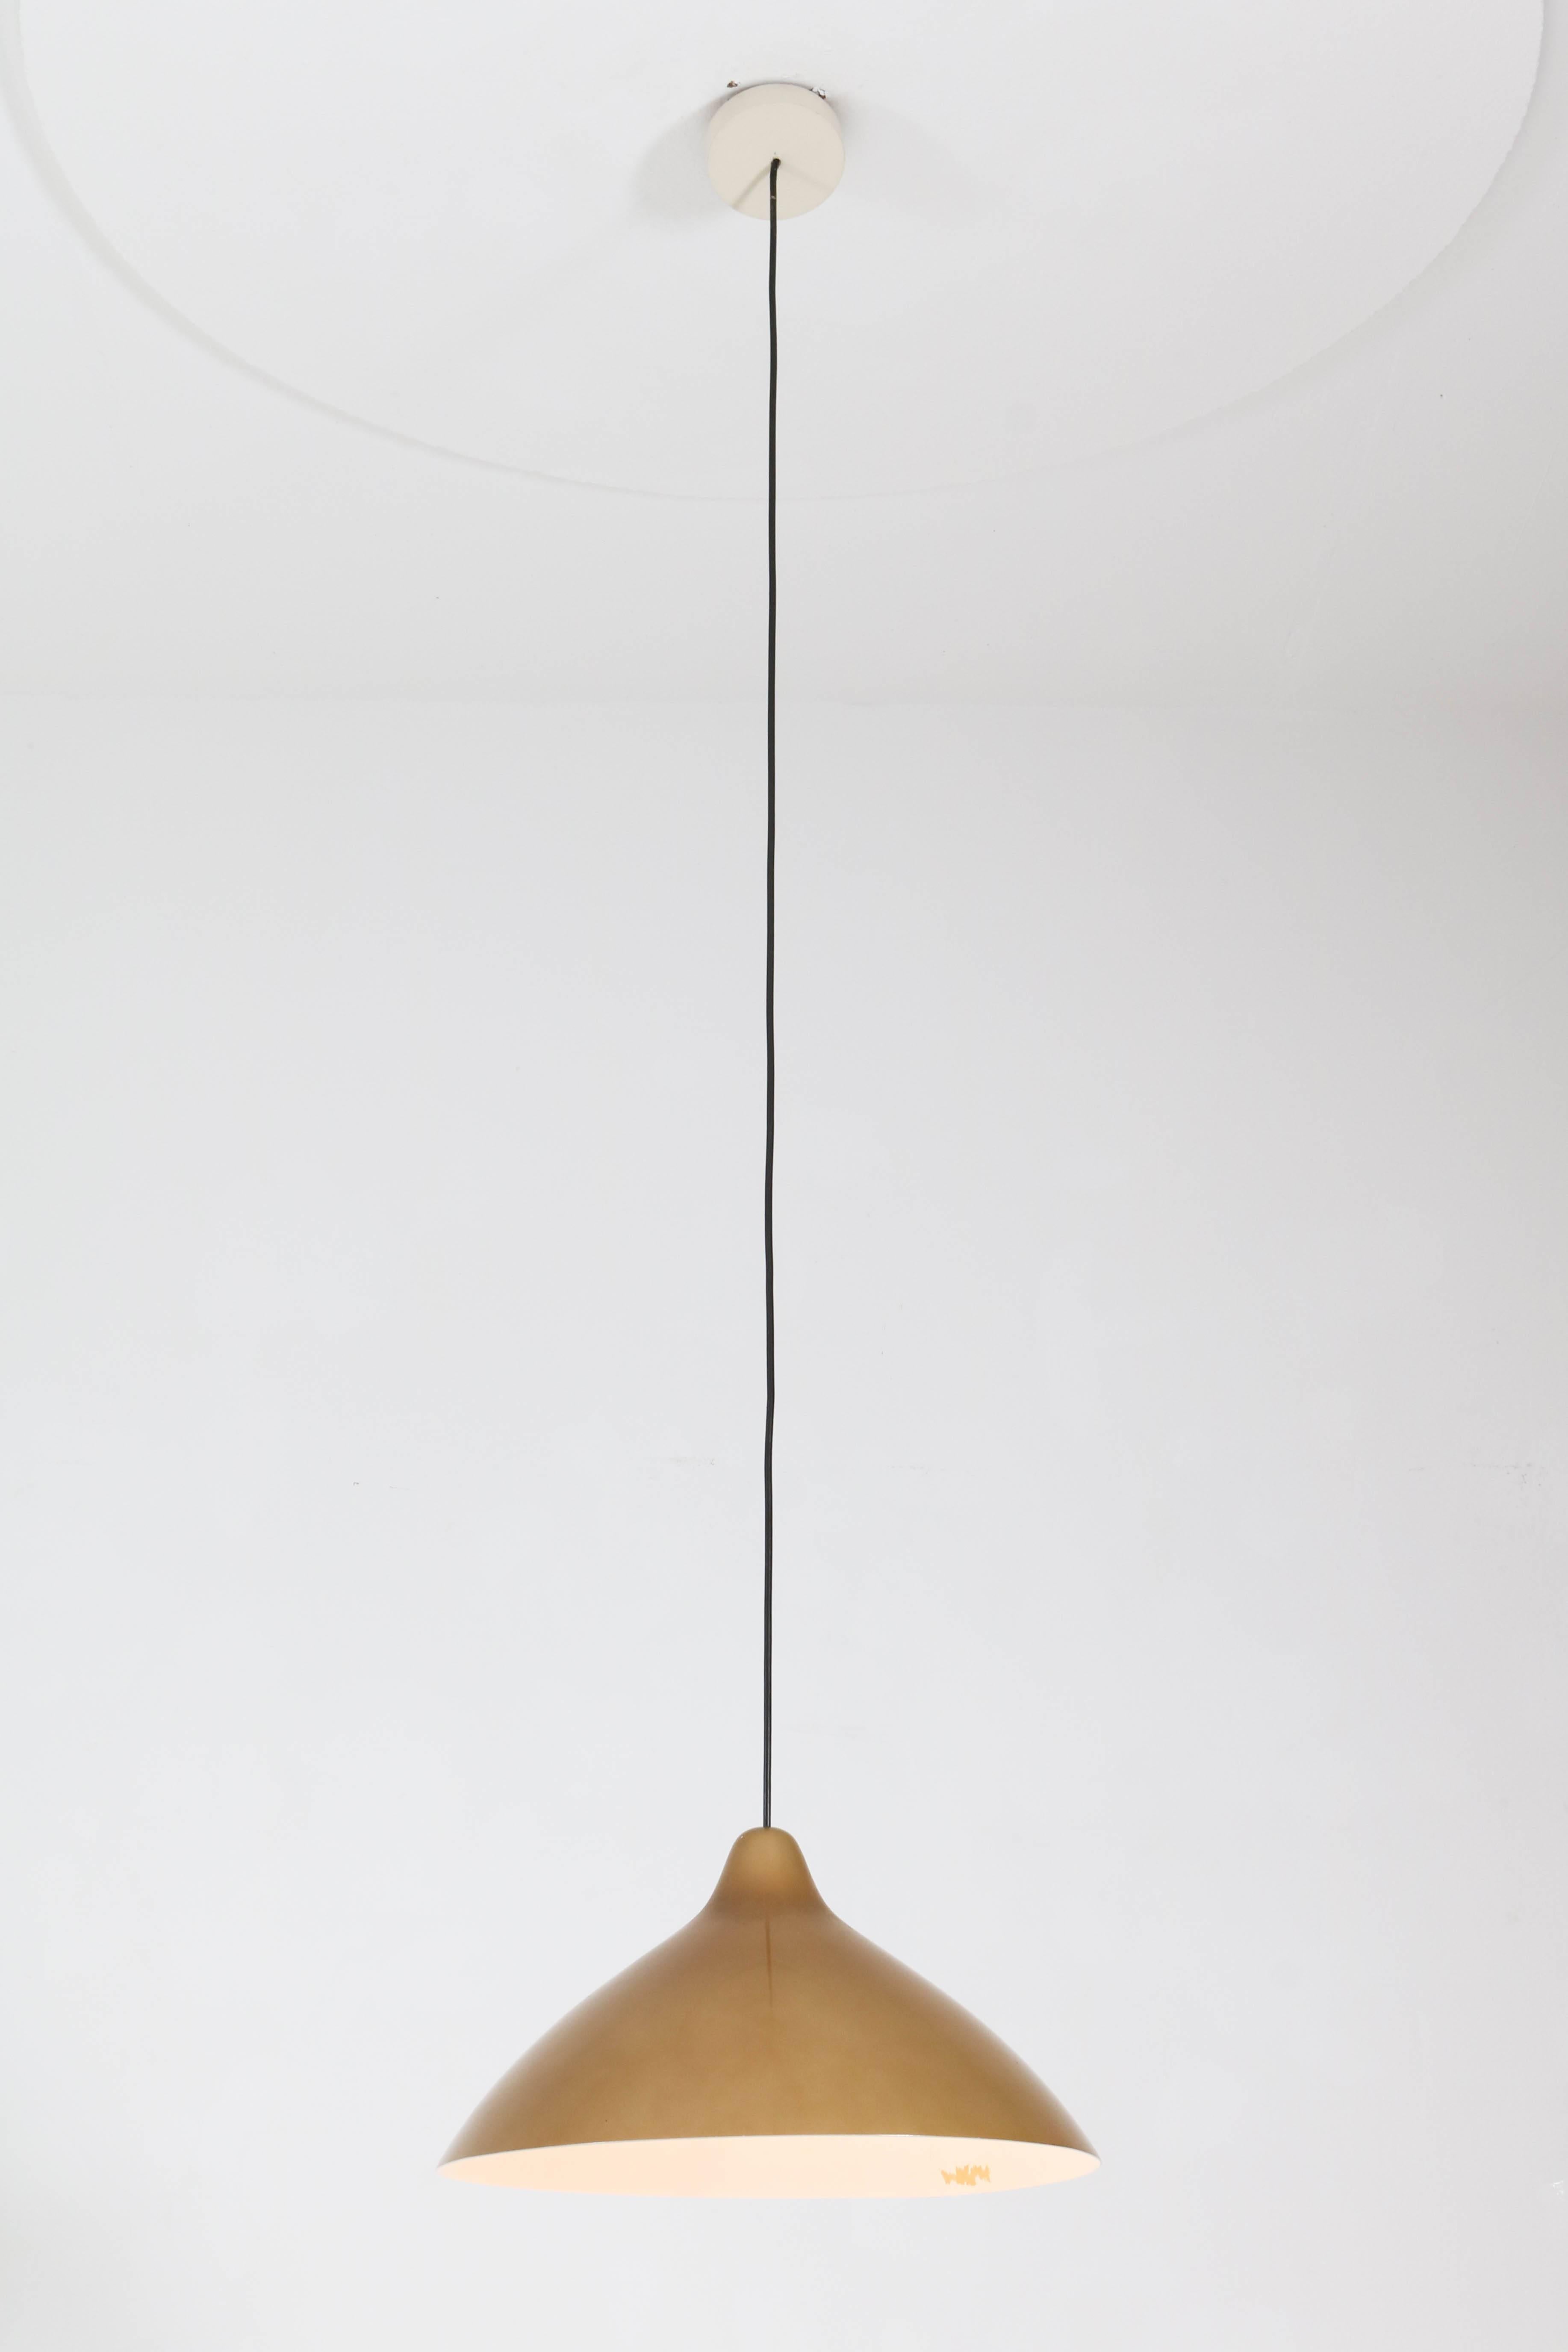 Mid-20th Century Mid-Century Modern Pendant by Lisa Johansson-Pape for Stockmann Orno, 1960s